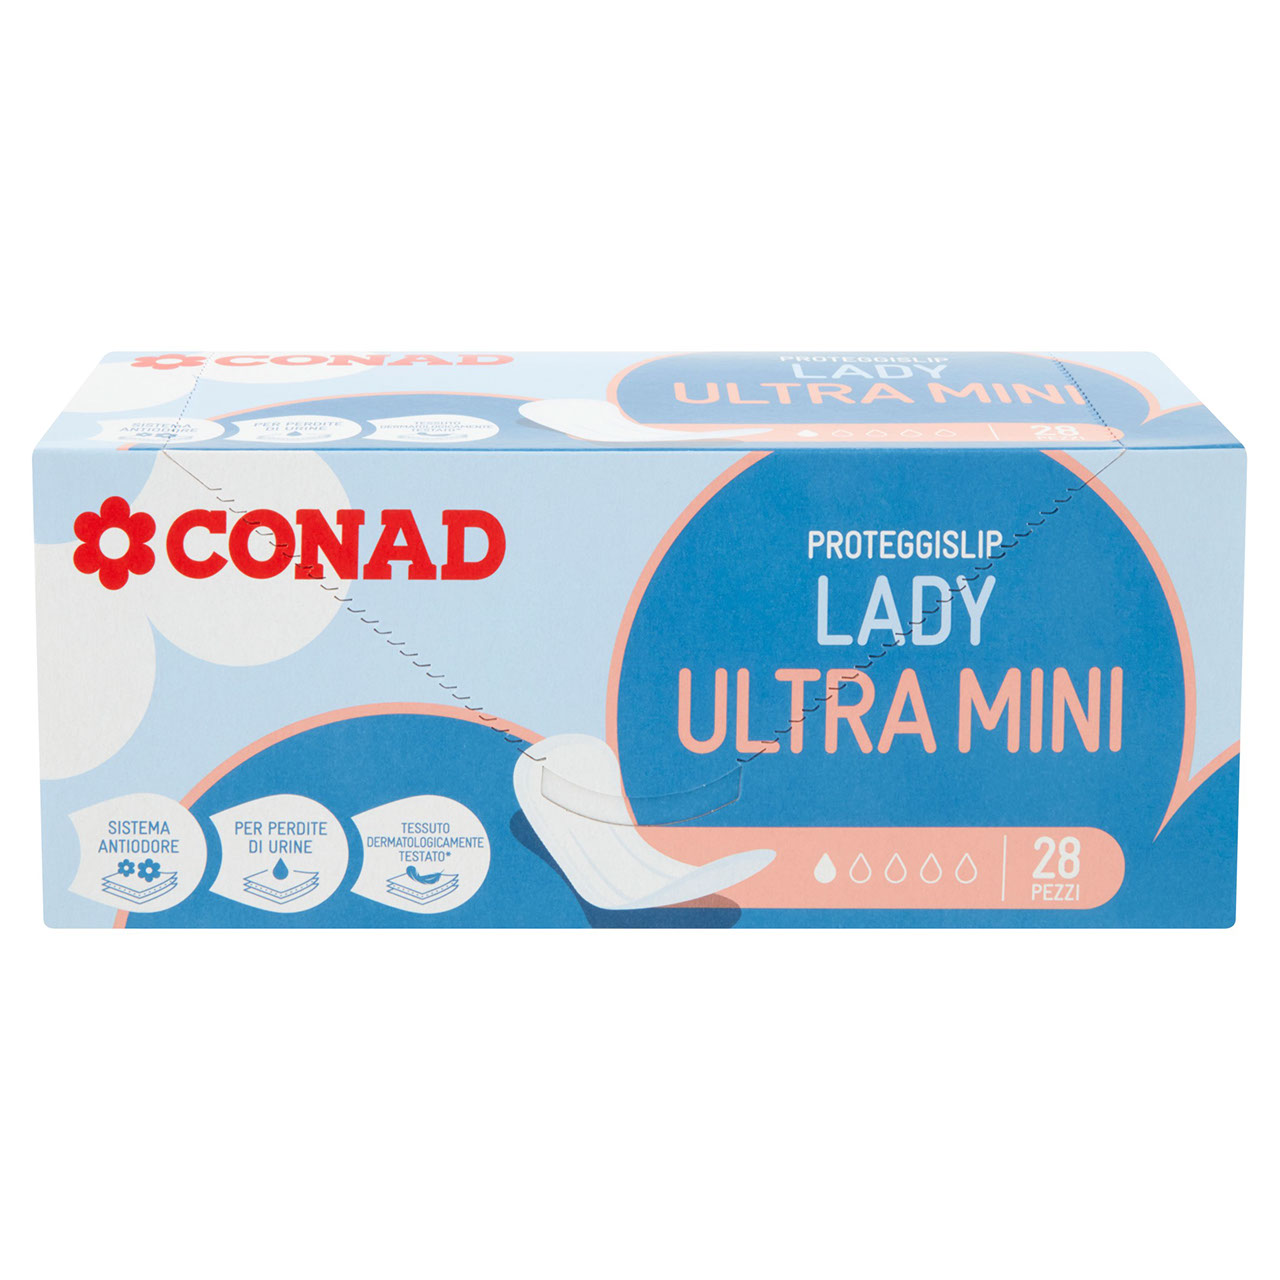 Proteggislip Lady Ultra Conad in vendita online